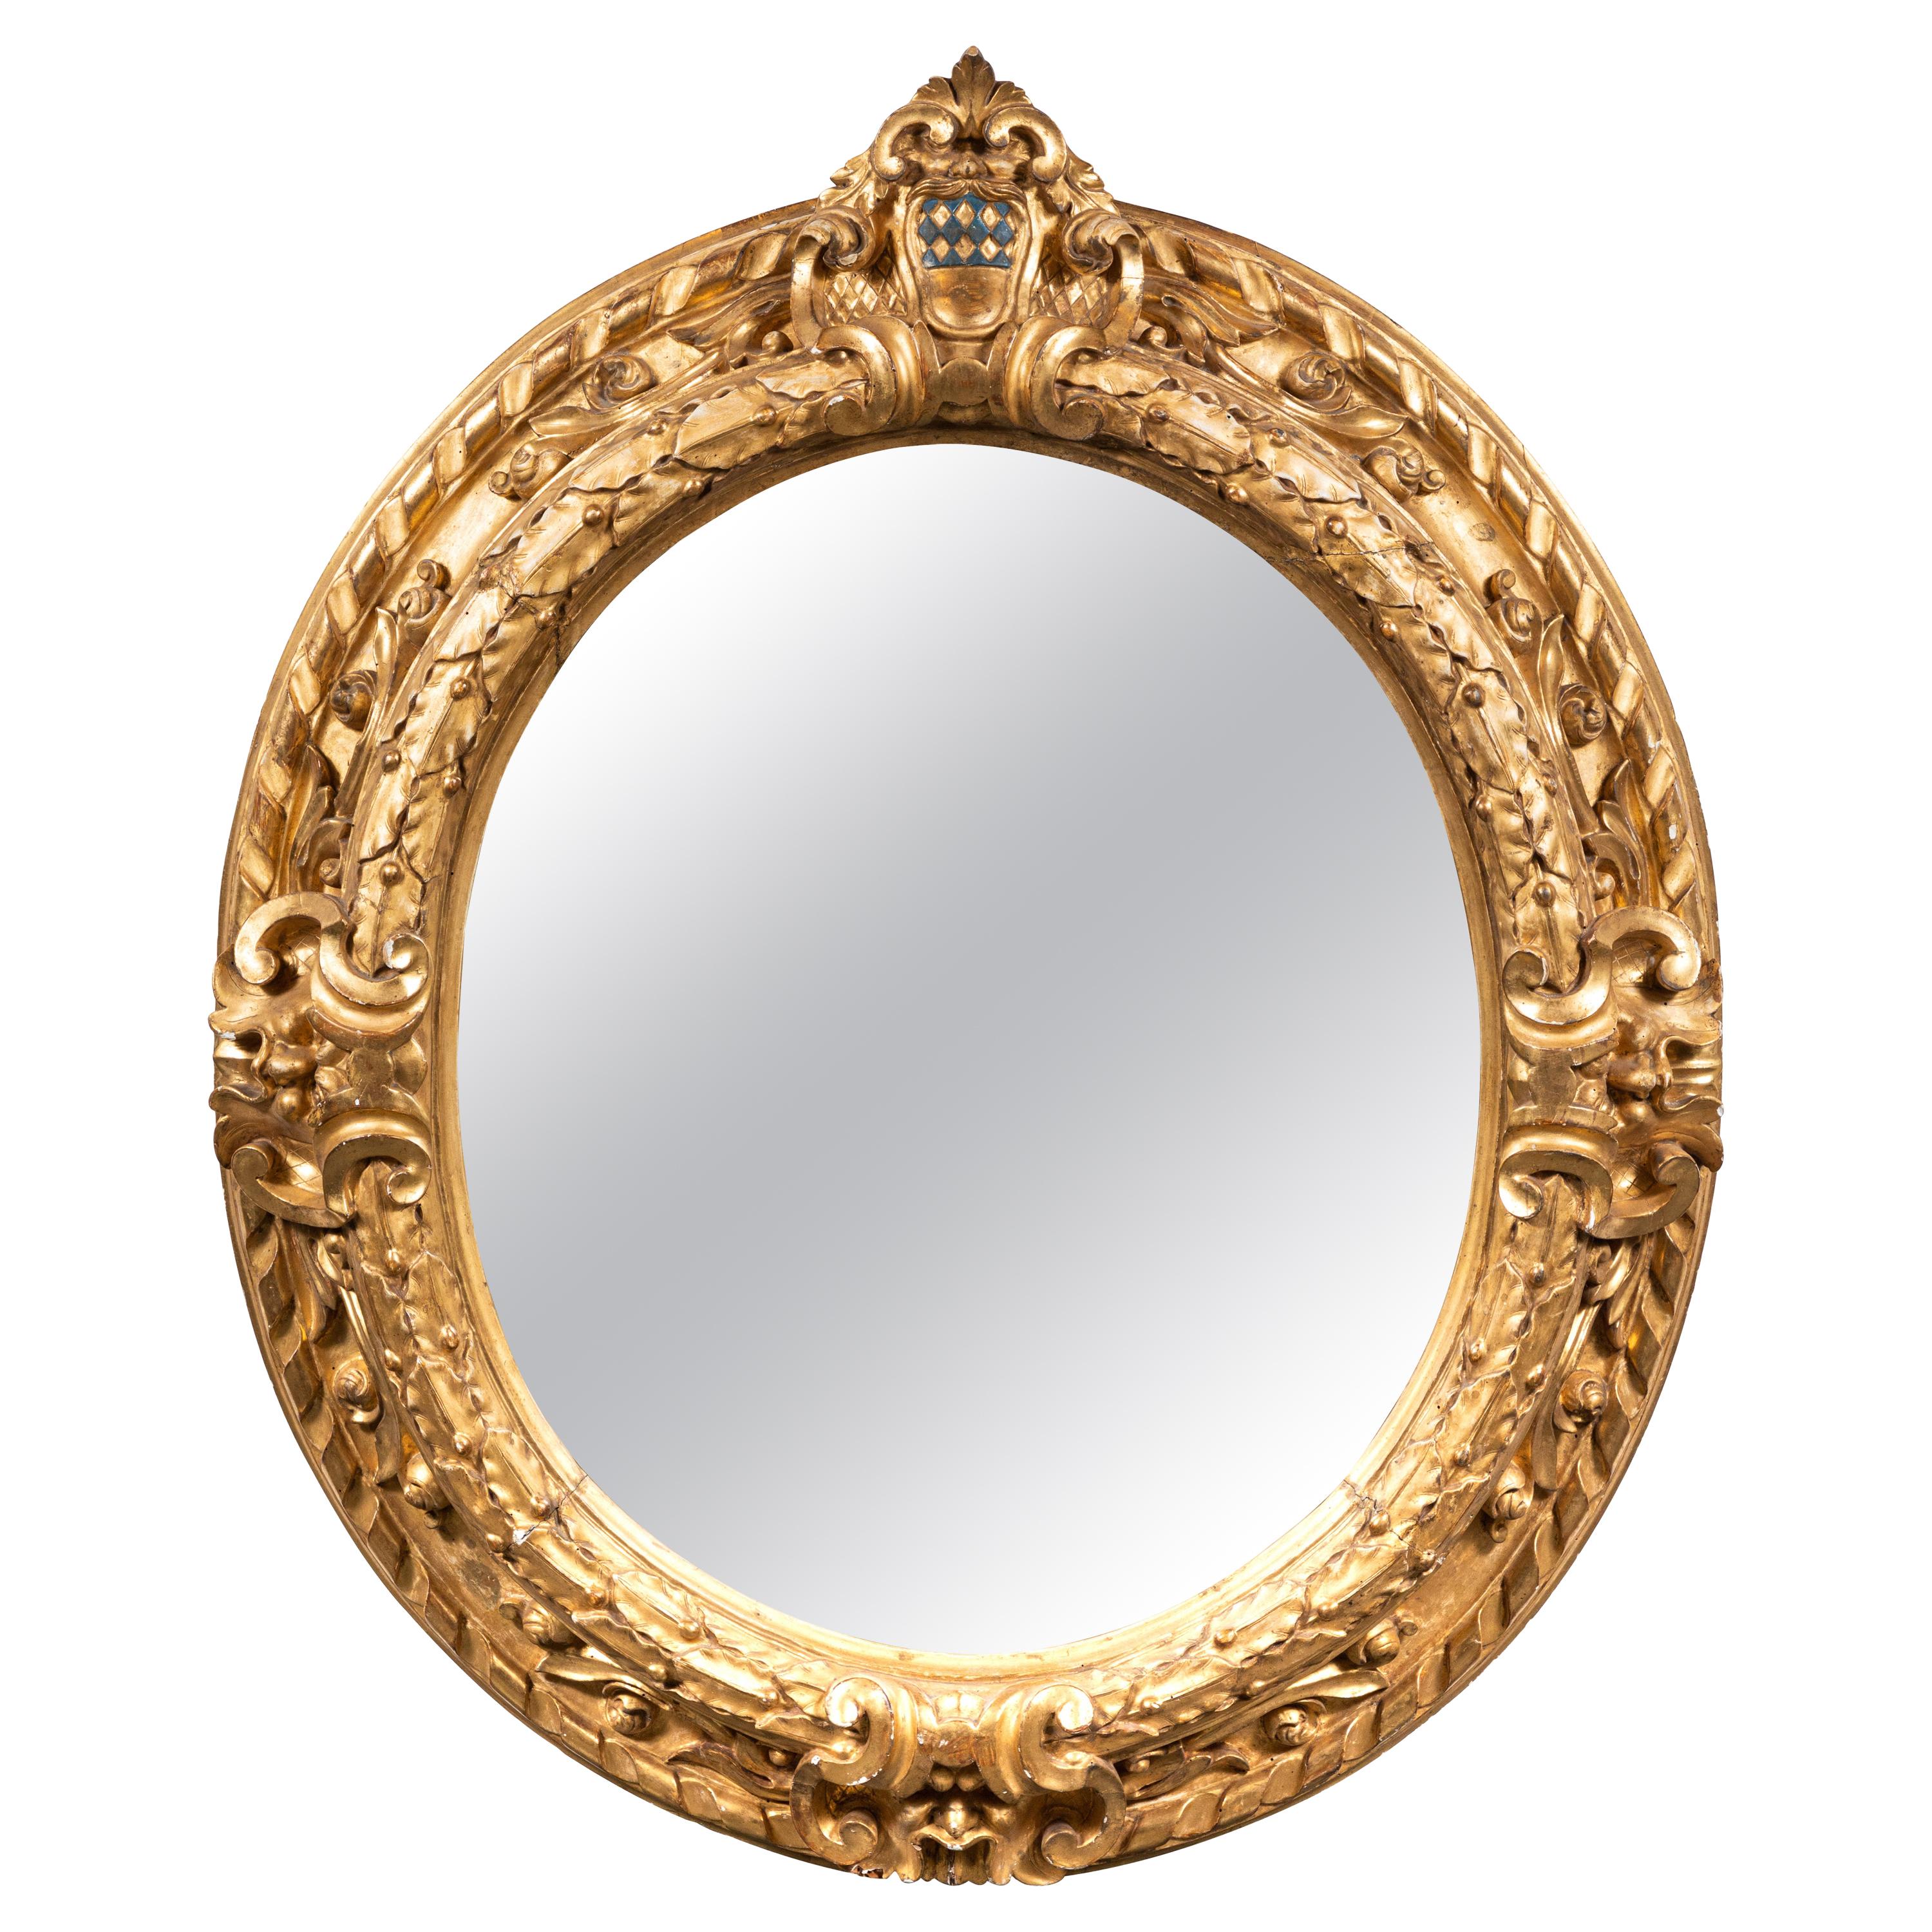 Miroir ovale en bois doré du XVIIIe siècle